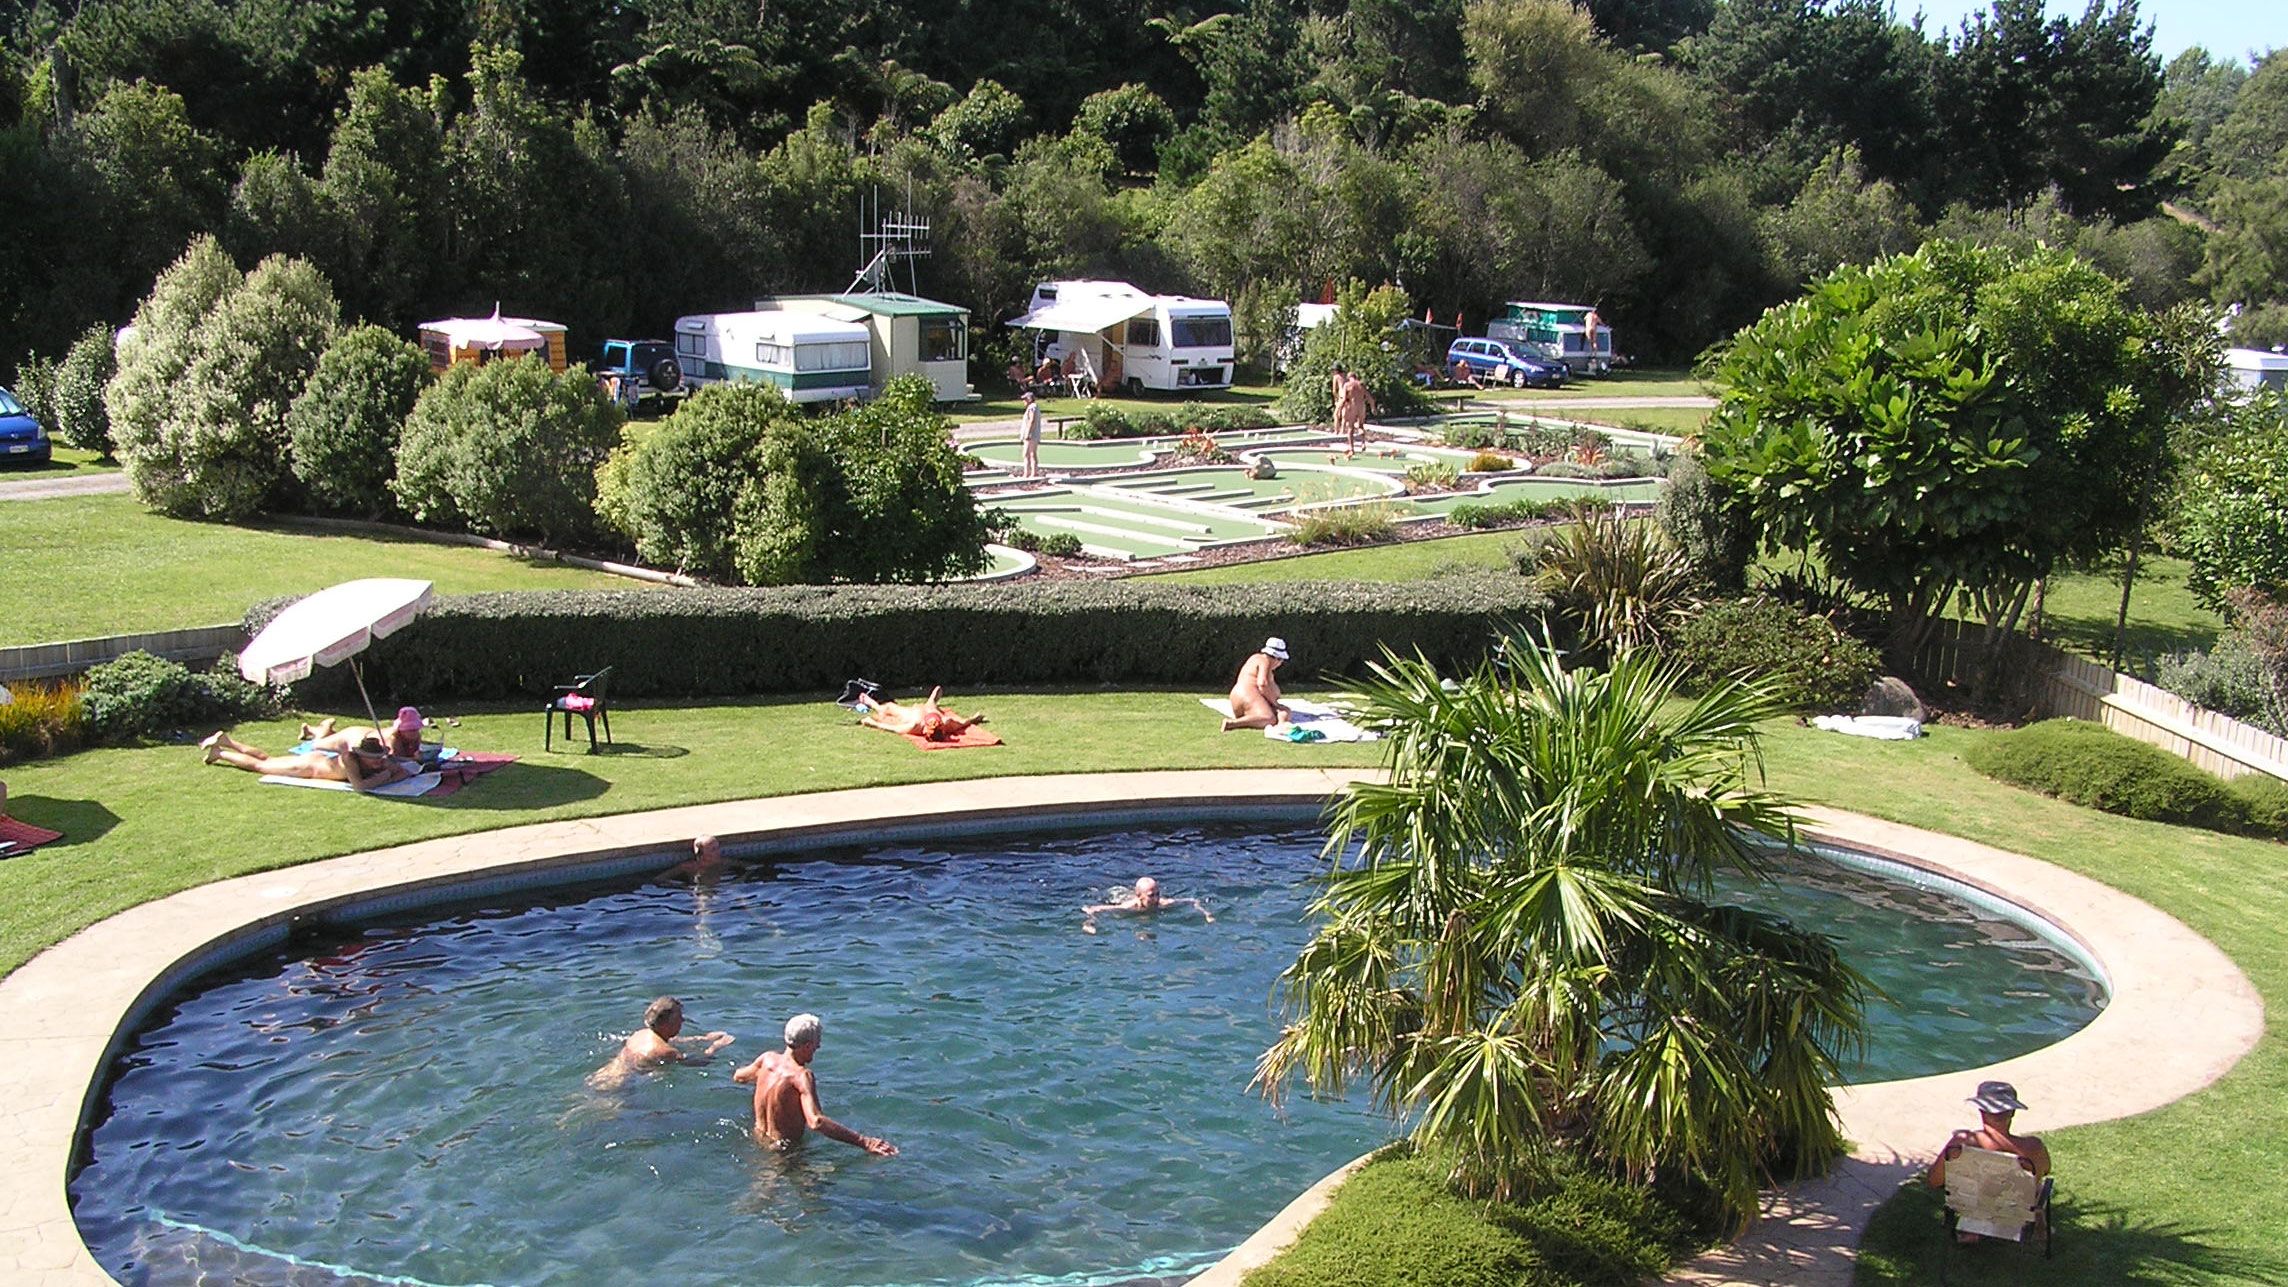 Nudist Colony Spread Legs - New Zealand nudist park for sale | CNN